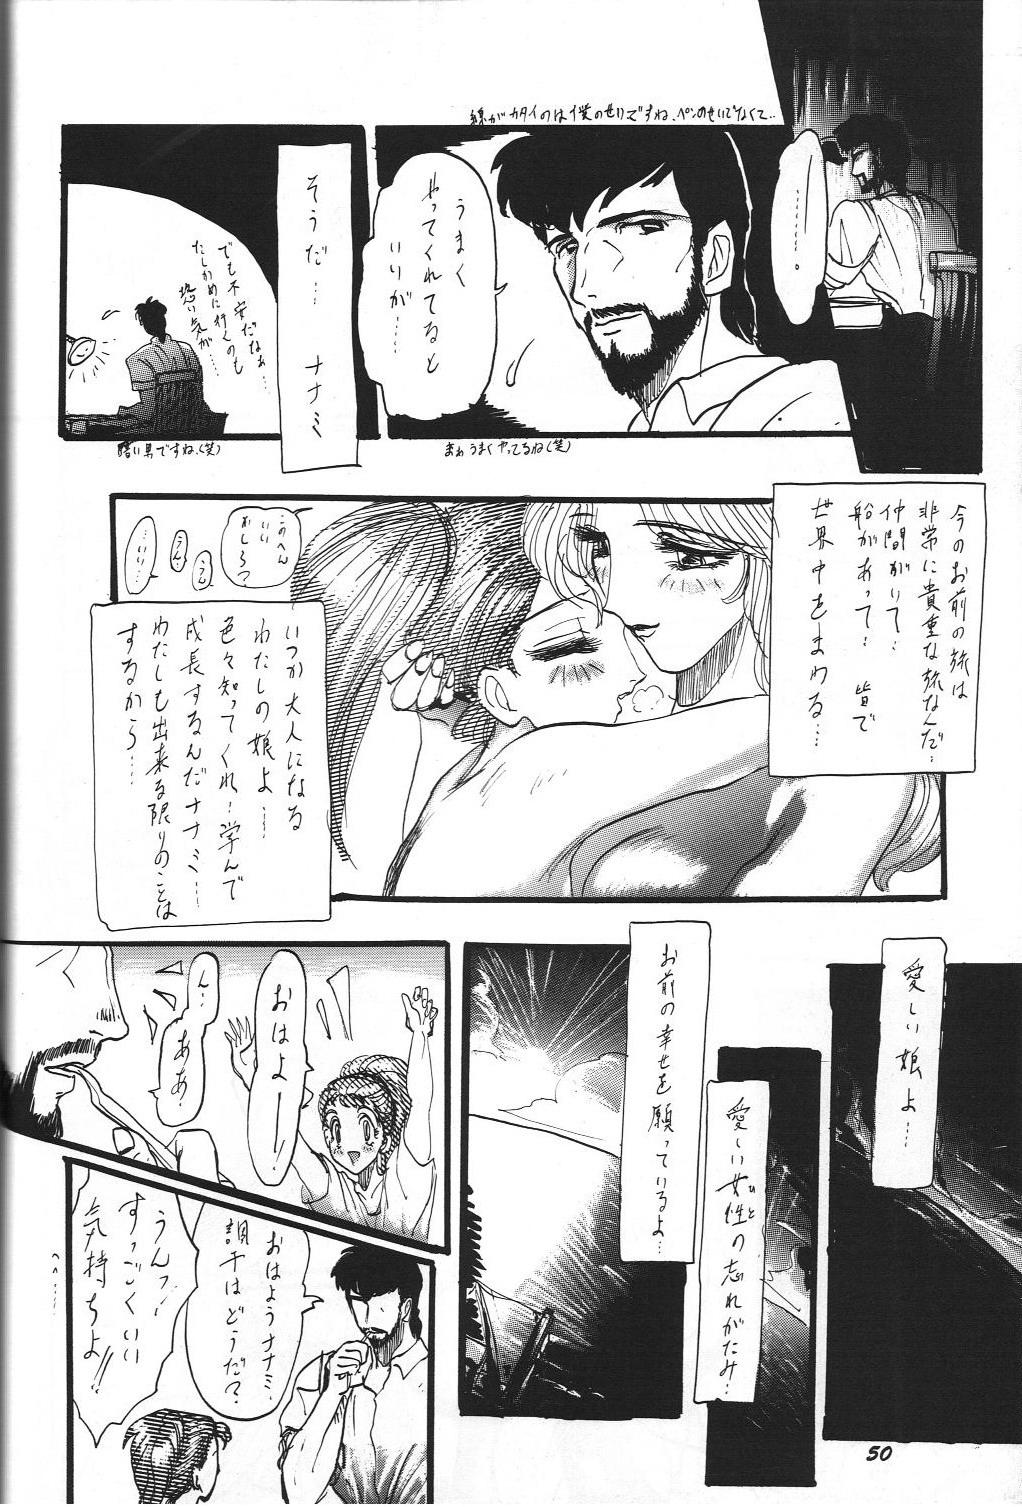 THE SECRET OF Chimatsuriya Vol. 8 48